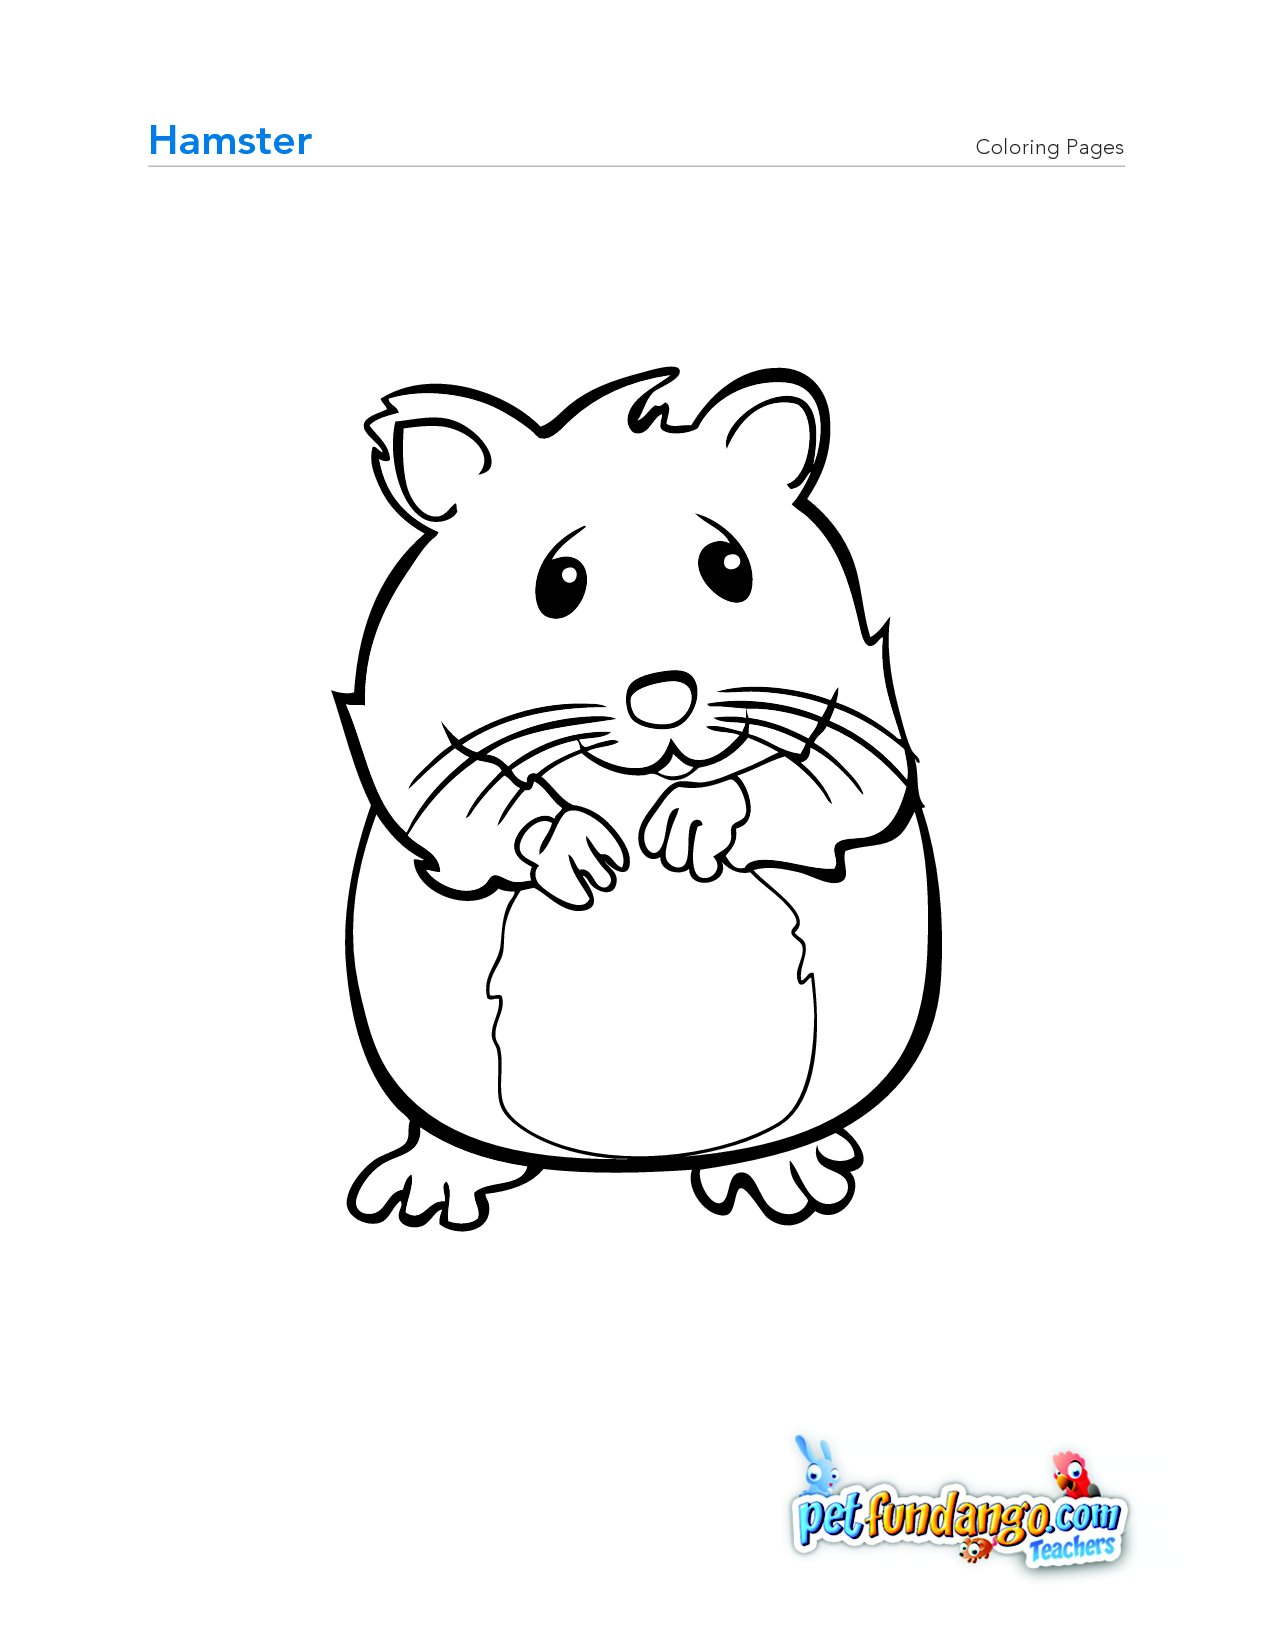 Kleurplaten nl: Lol Kleurplaat Hamster